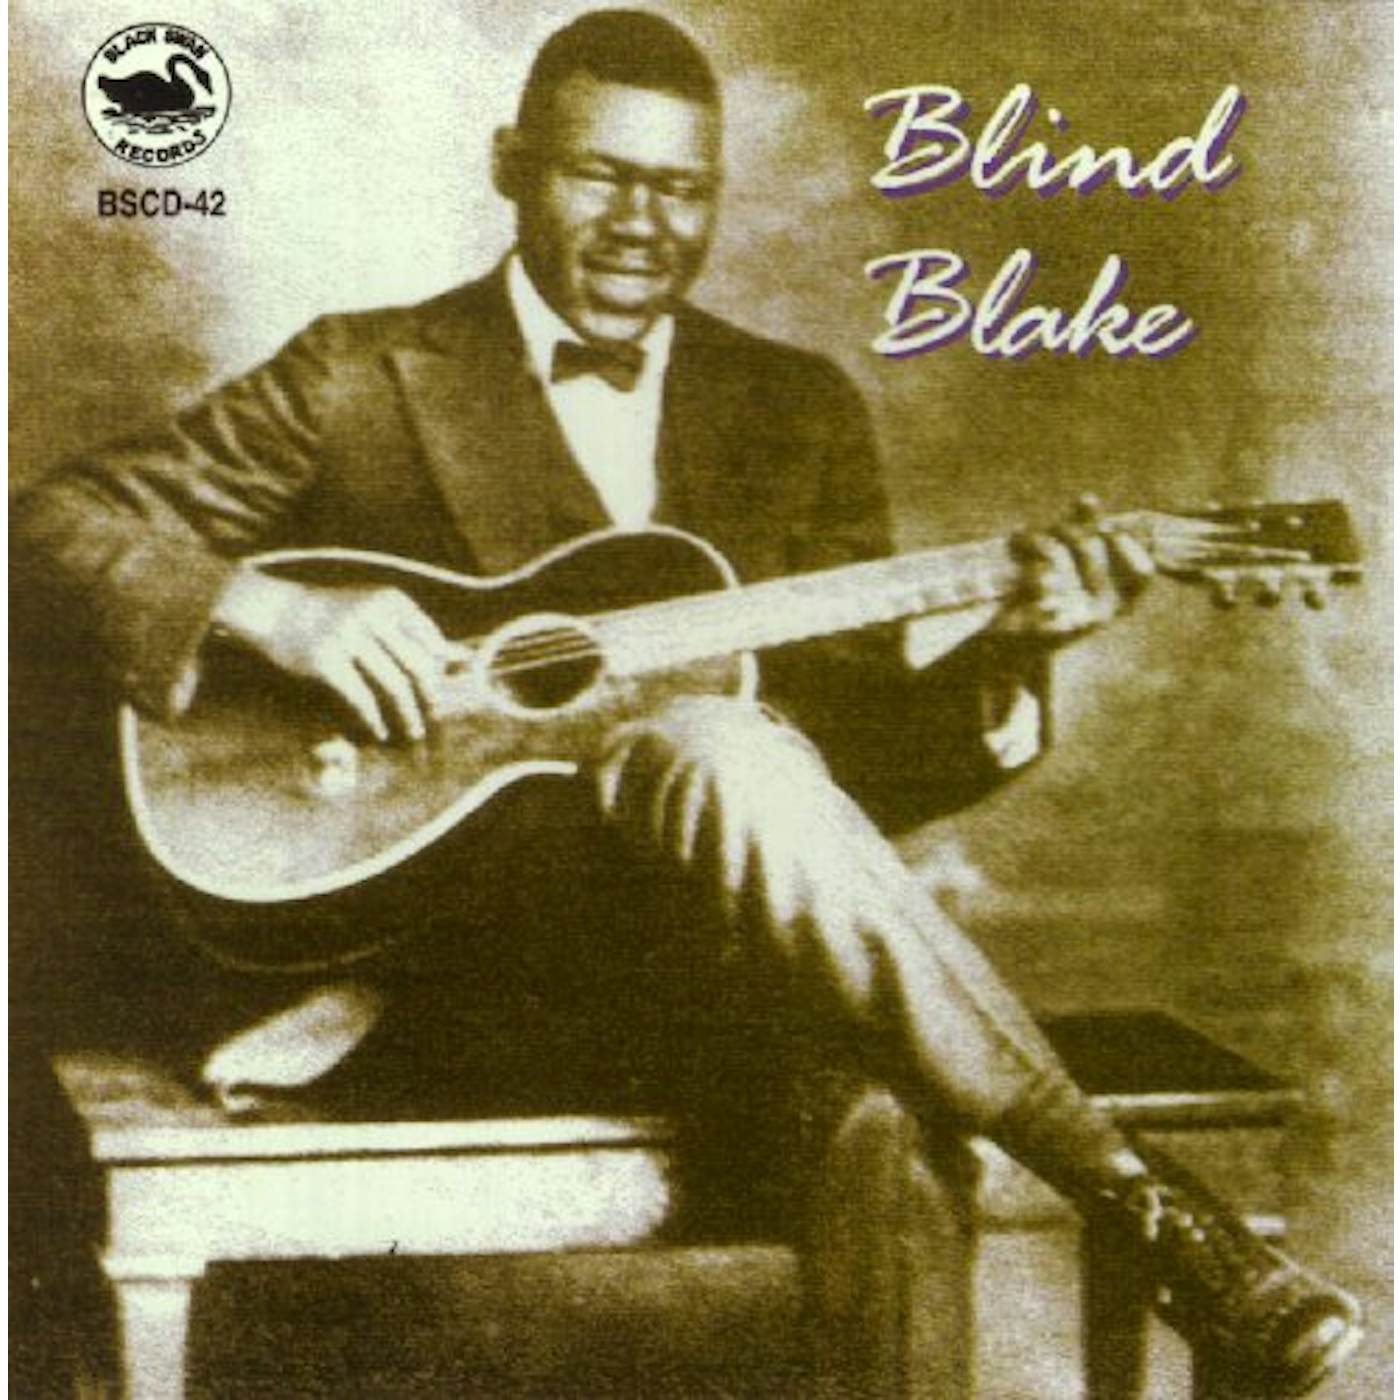 BLIND BLAKE CD